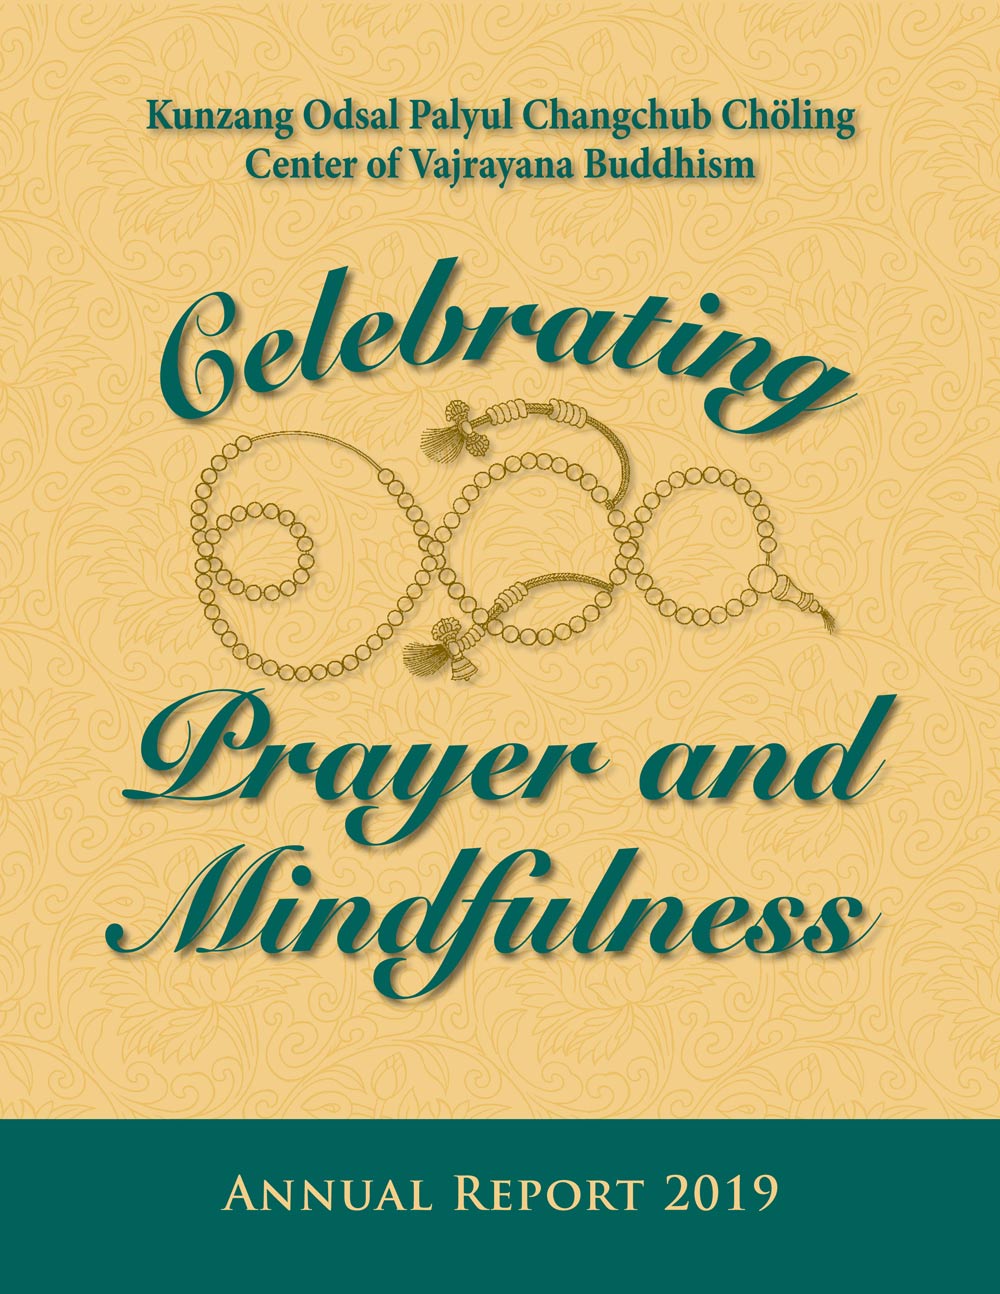 KPC 2019 annual report - Celebrating Prayer and Mindfulness